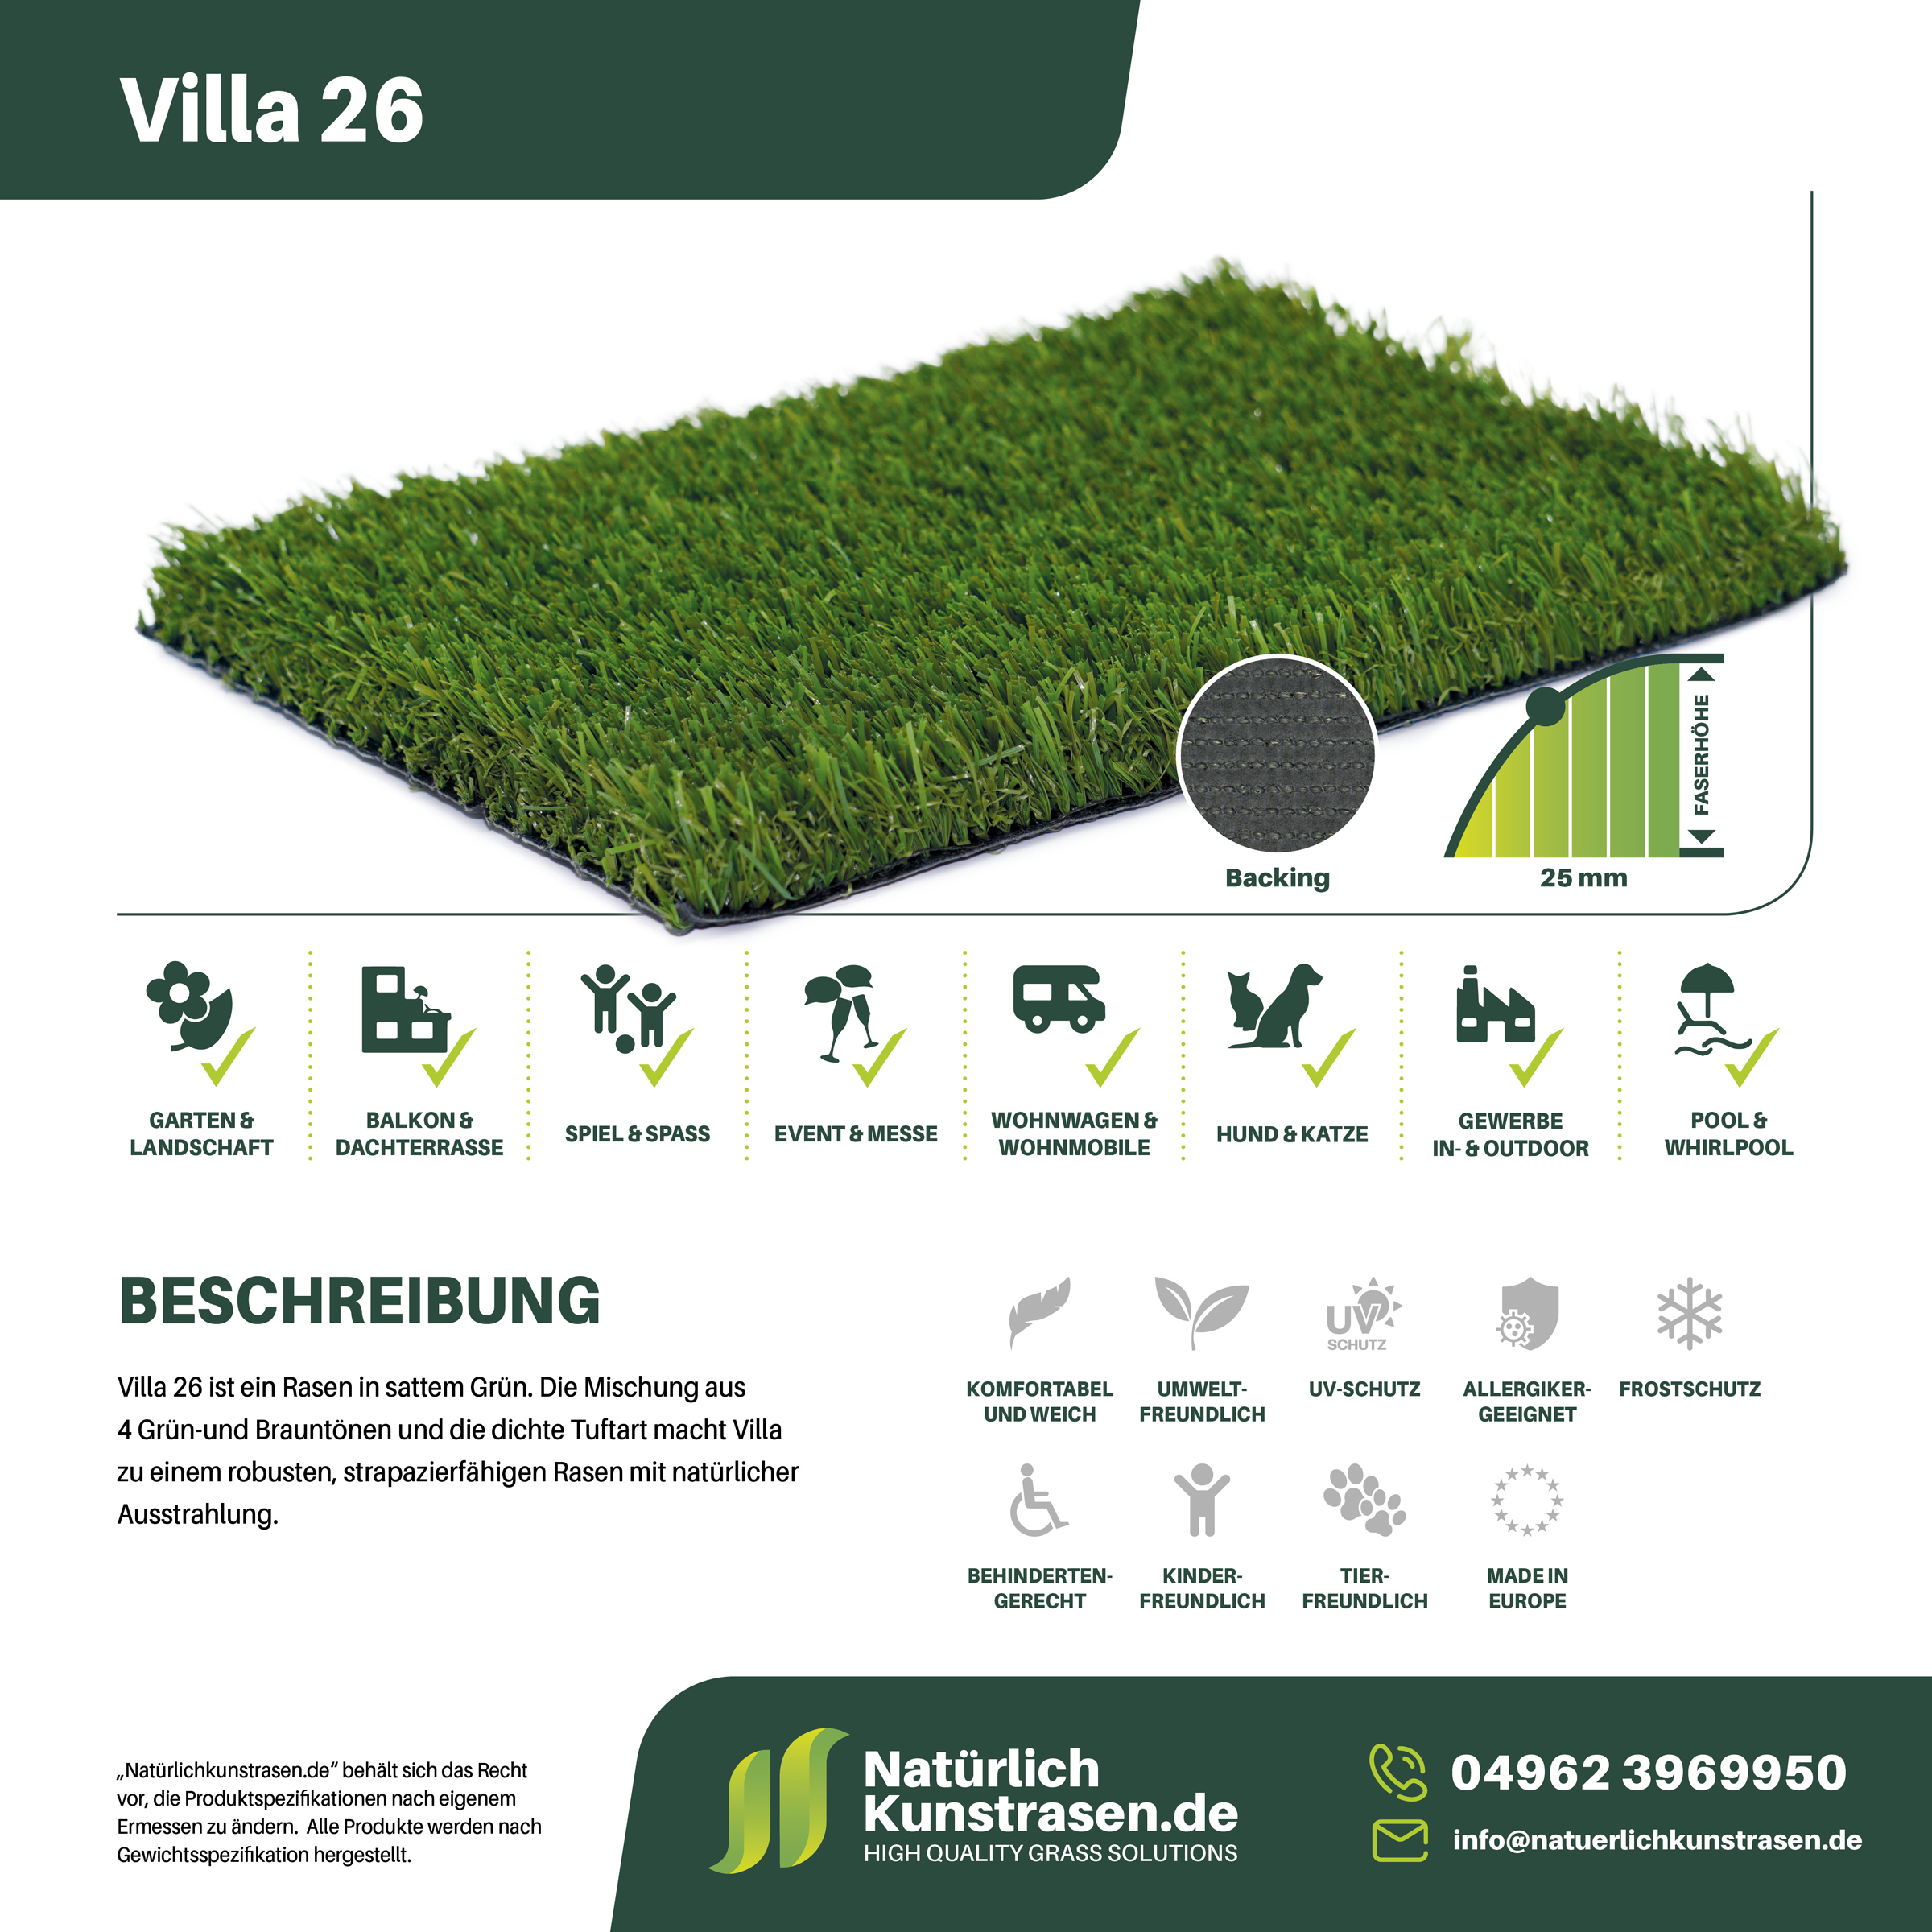 Kunstrasen-Produkte+Anwendungsgebiete+Name-Villa-26.jpg